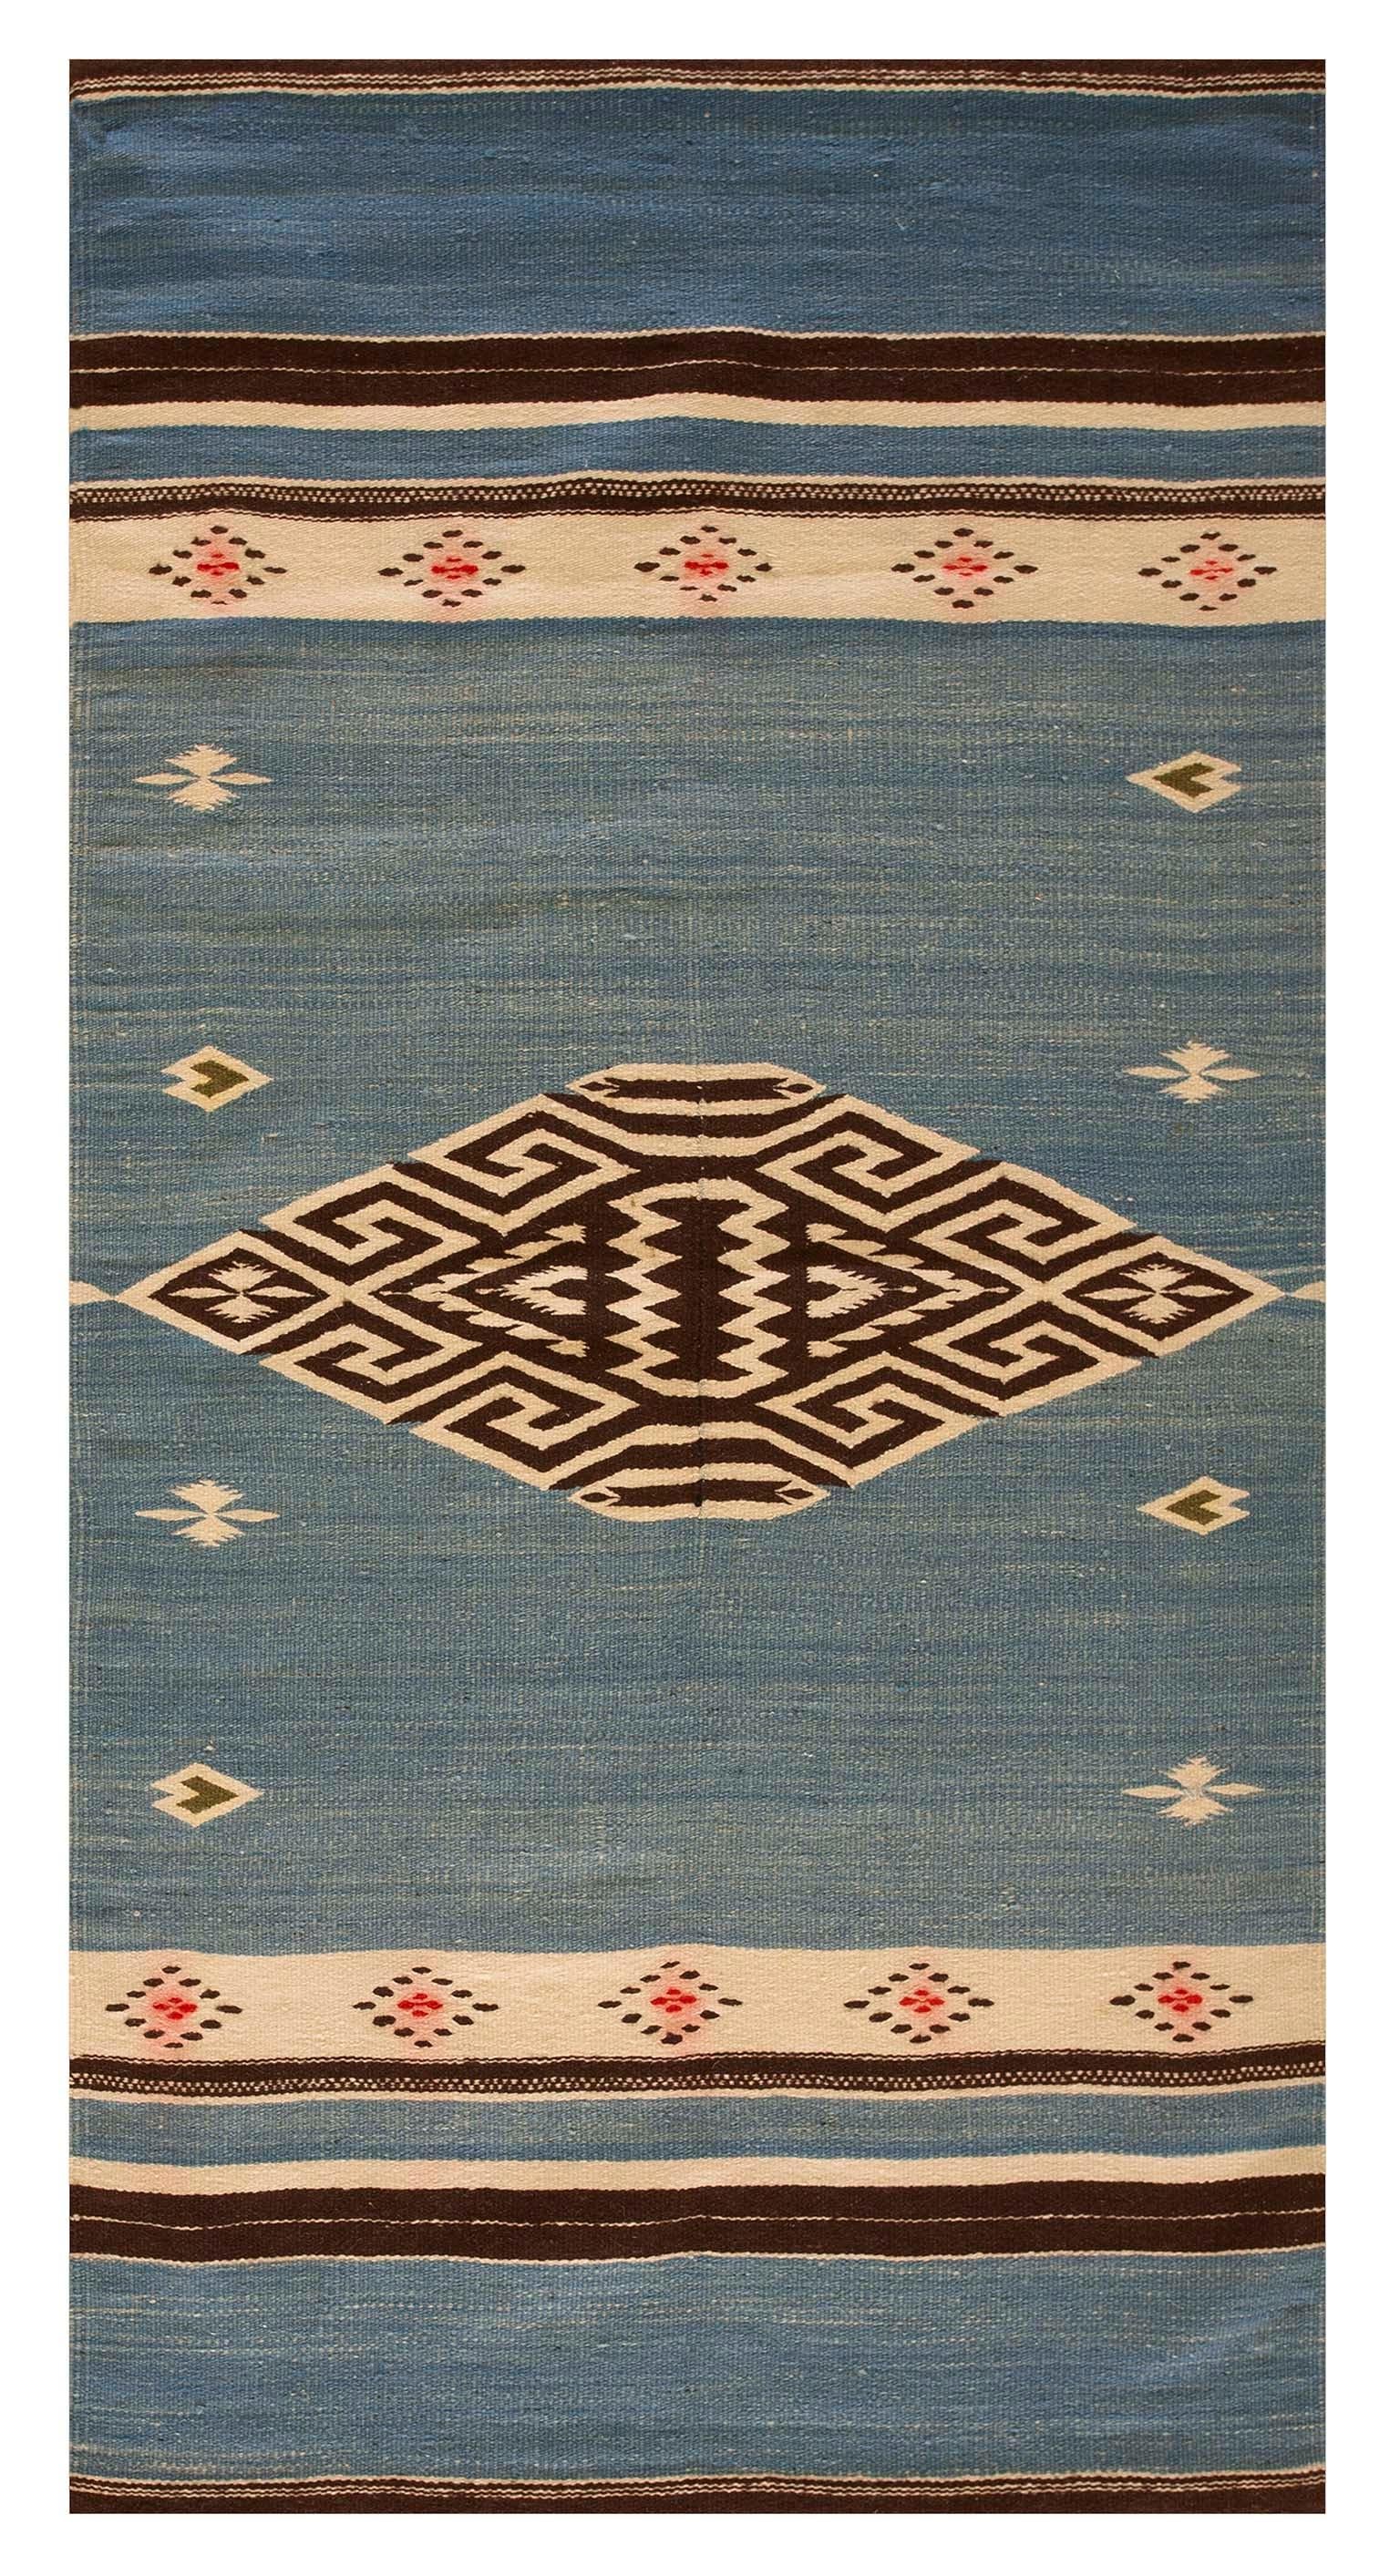 Set of Mid-20th Century Chimayo flat weave carpets ( 2' 4